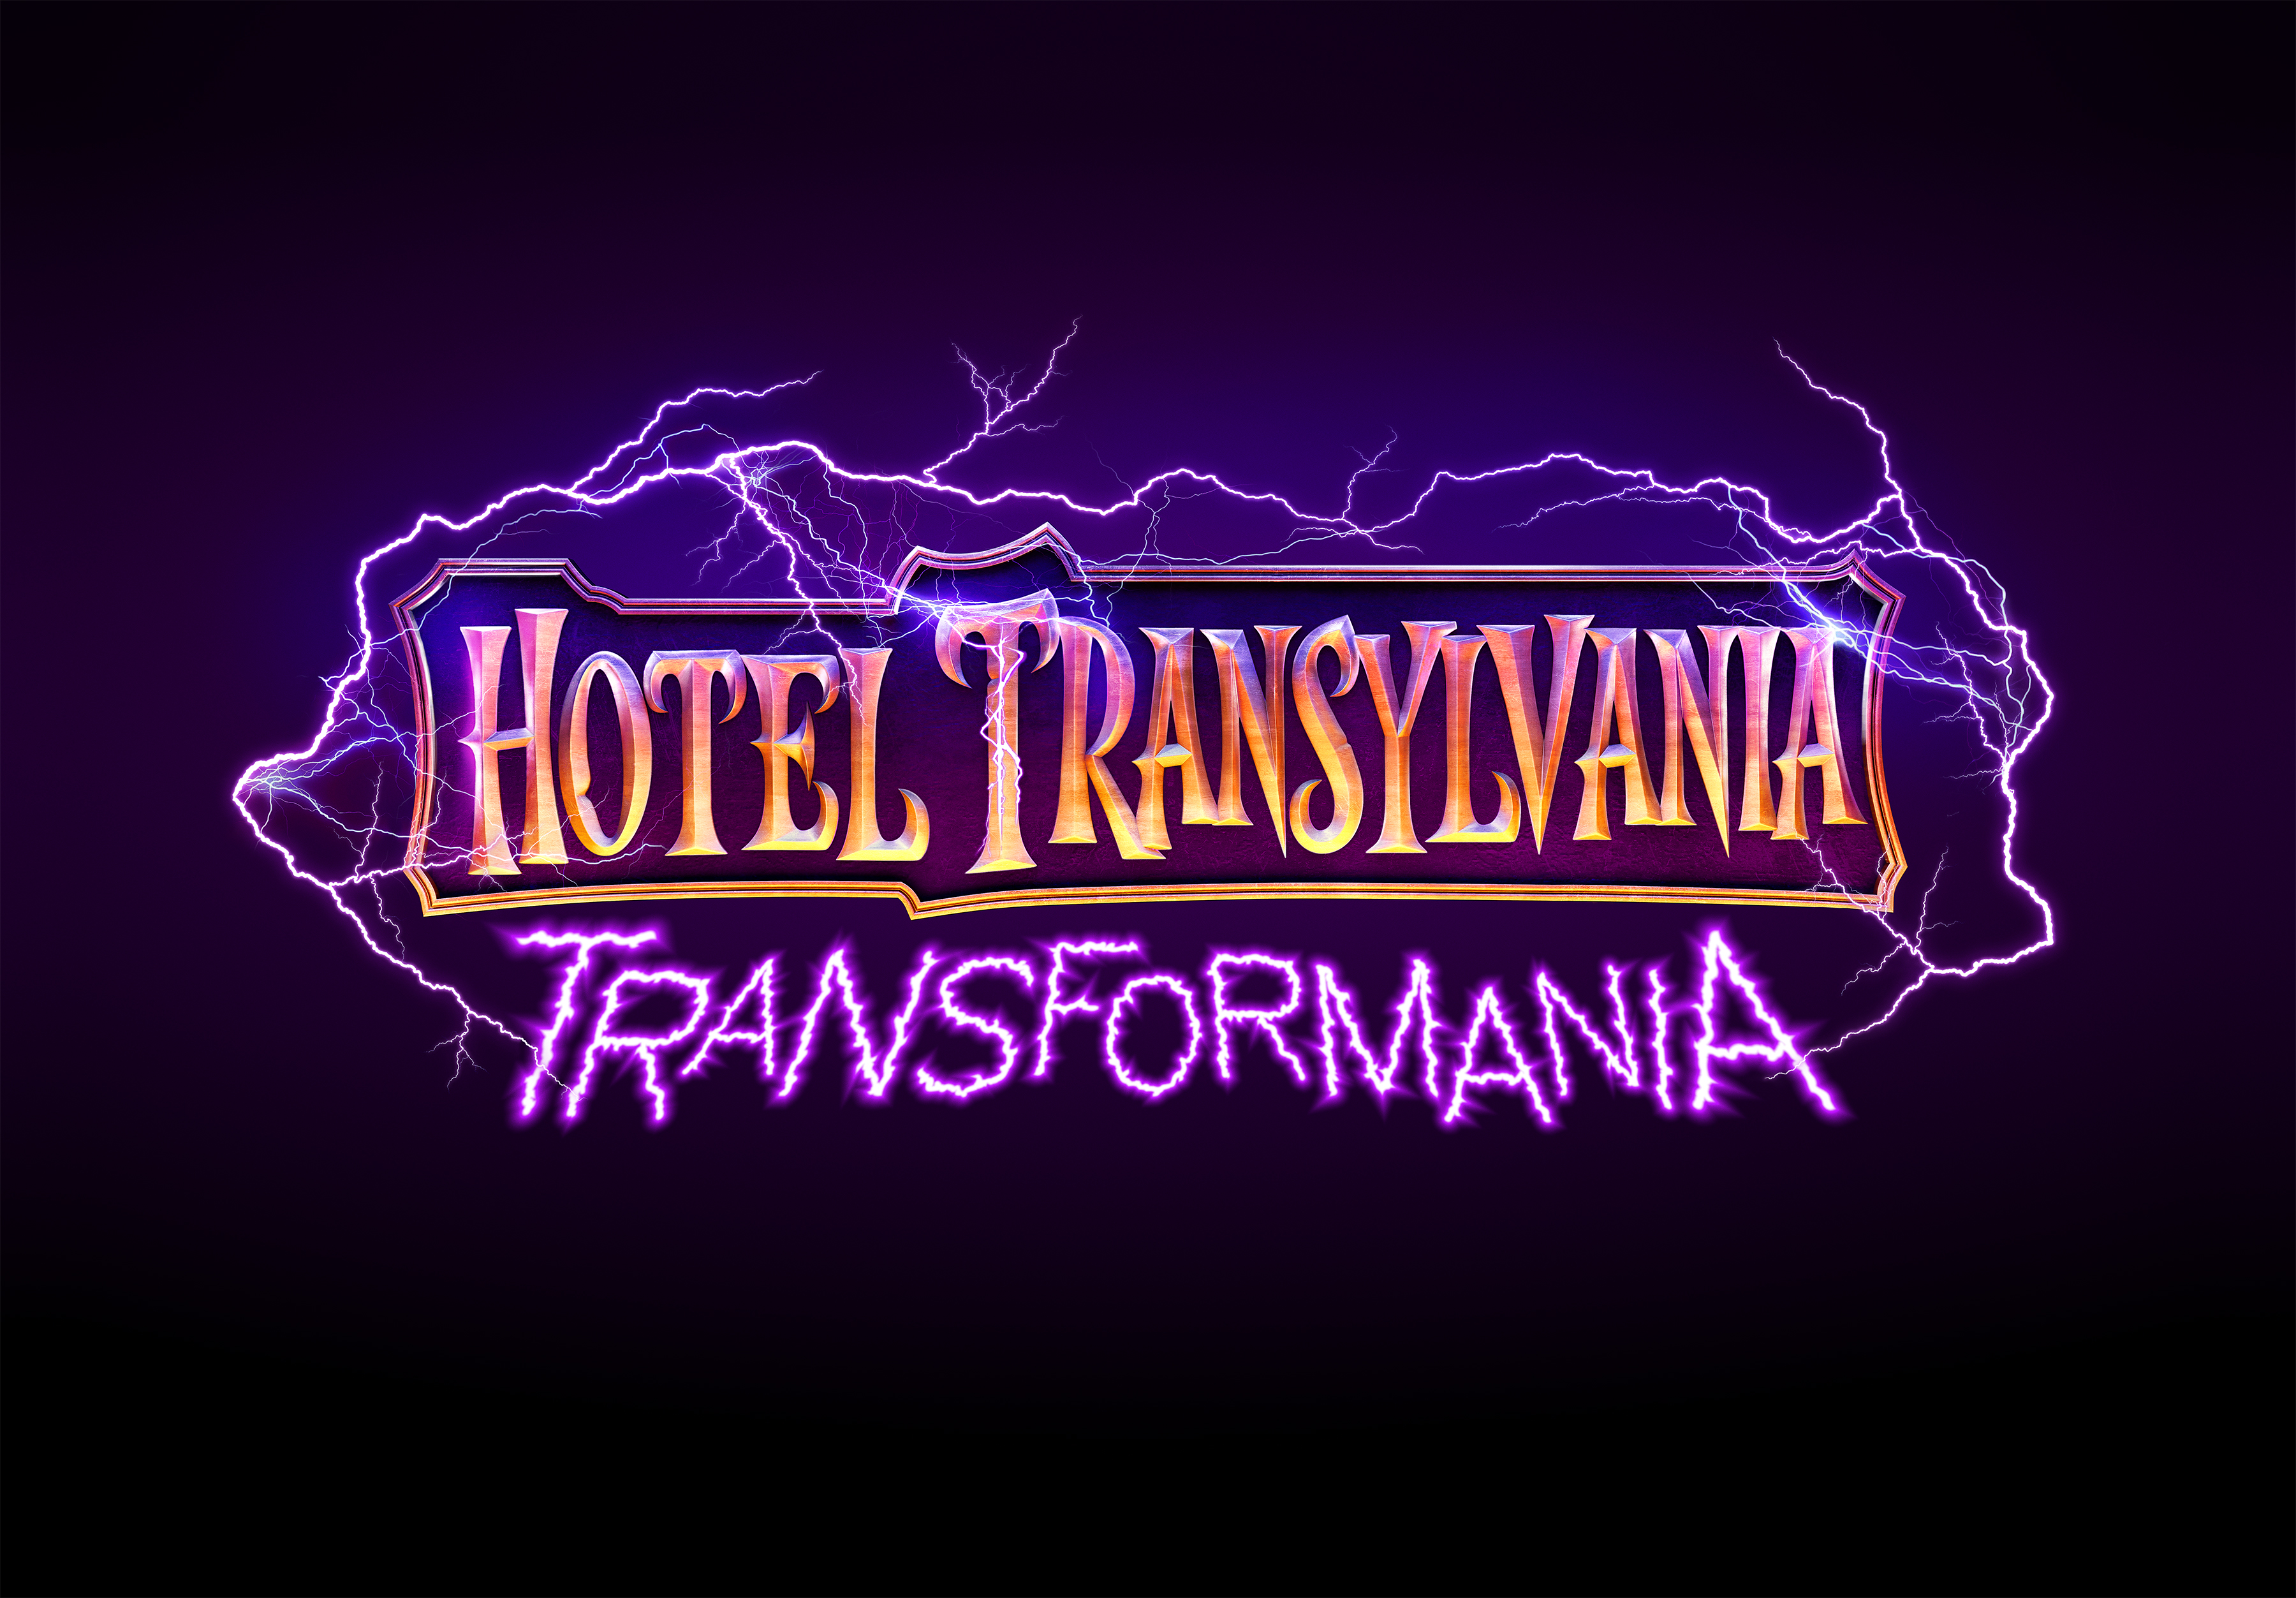 Transylvania transformania hotel Hotel Transylvania: